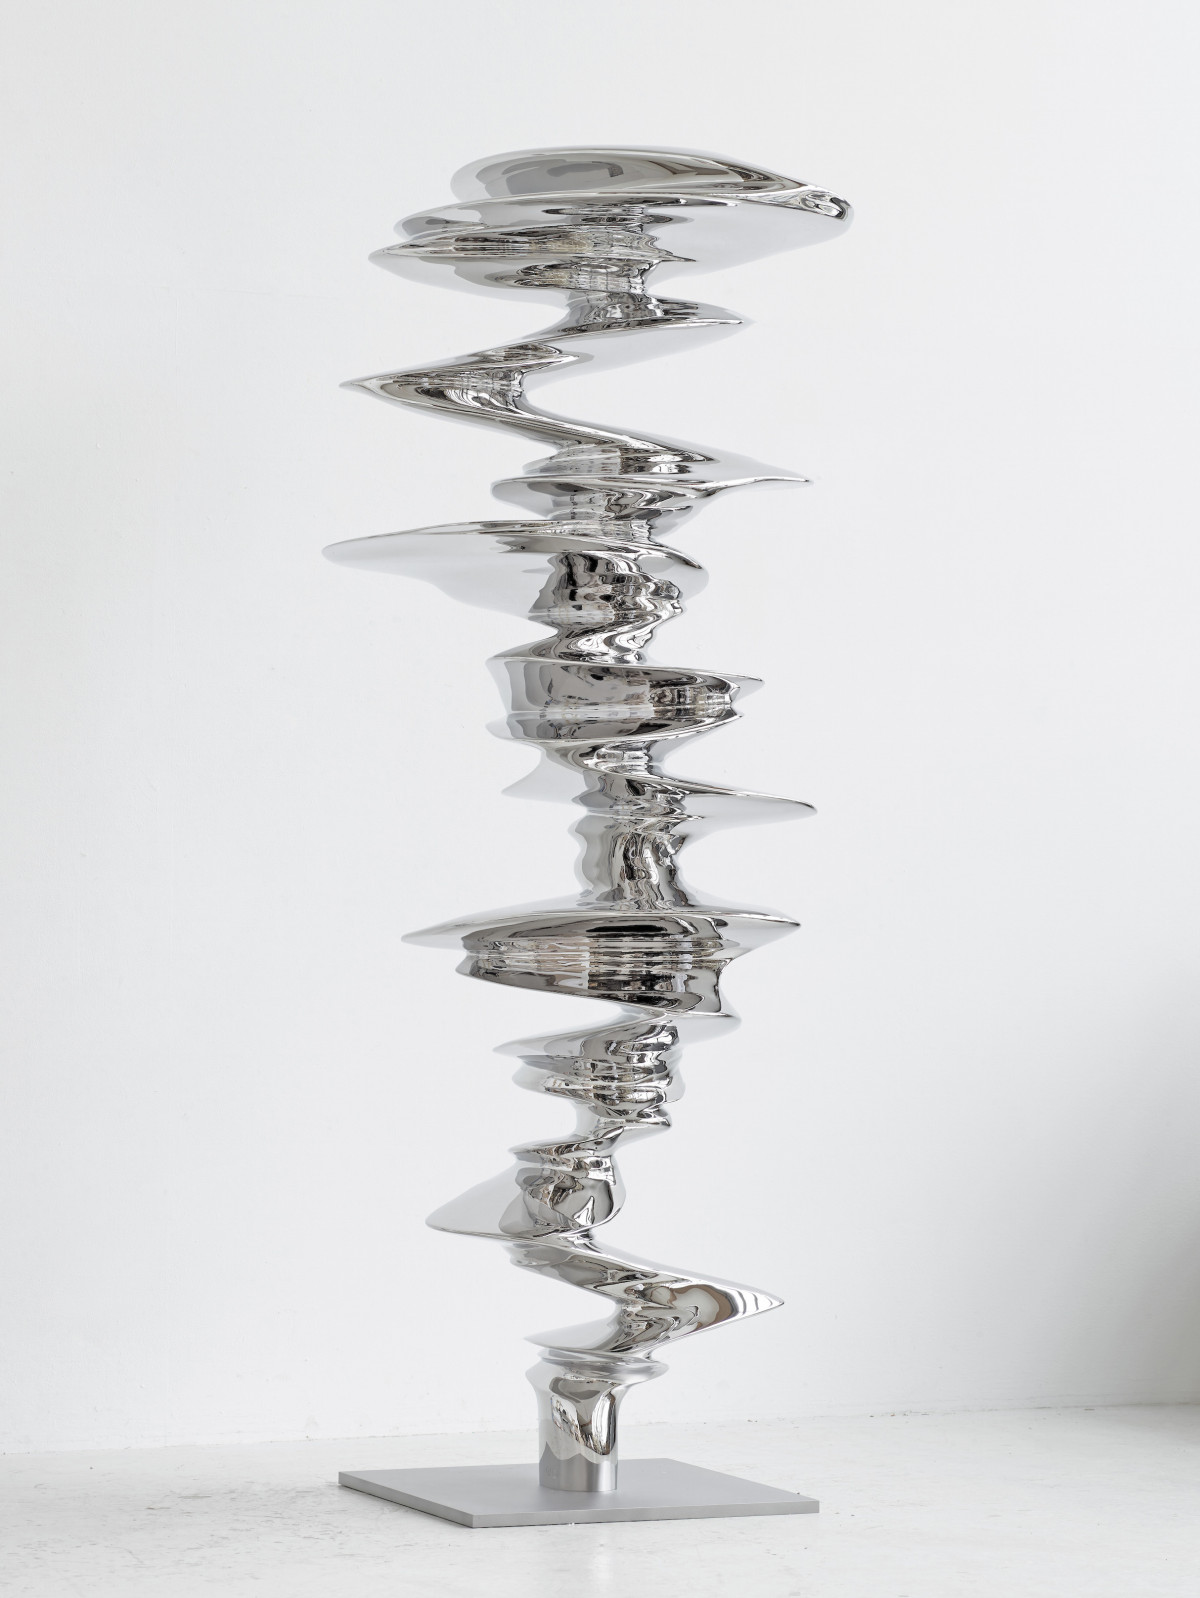 Tony Cragg, ‘Elliptical Column’, 2021, Stainless steel